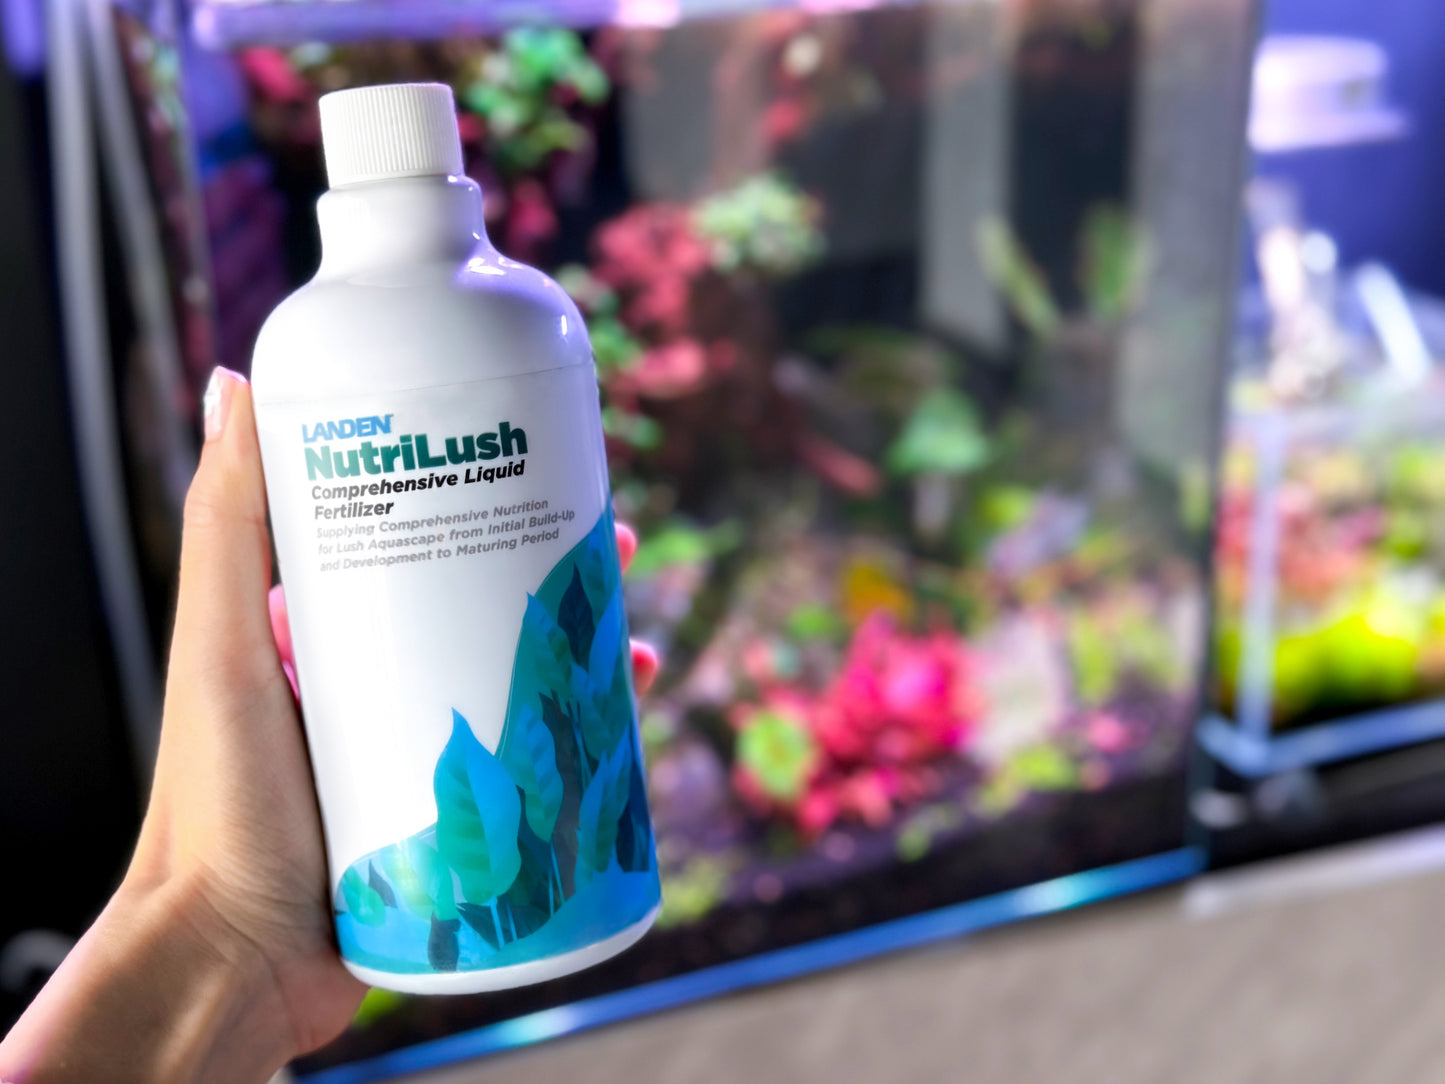 LANDEN NutriLush Comprehensive Liquid Fertilizer, Nutrition for Lush Aquascape from Initial Build-Up and Development to Maturing Period, 500ml(17oz)